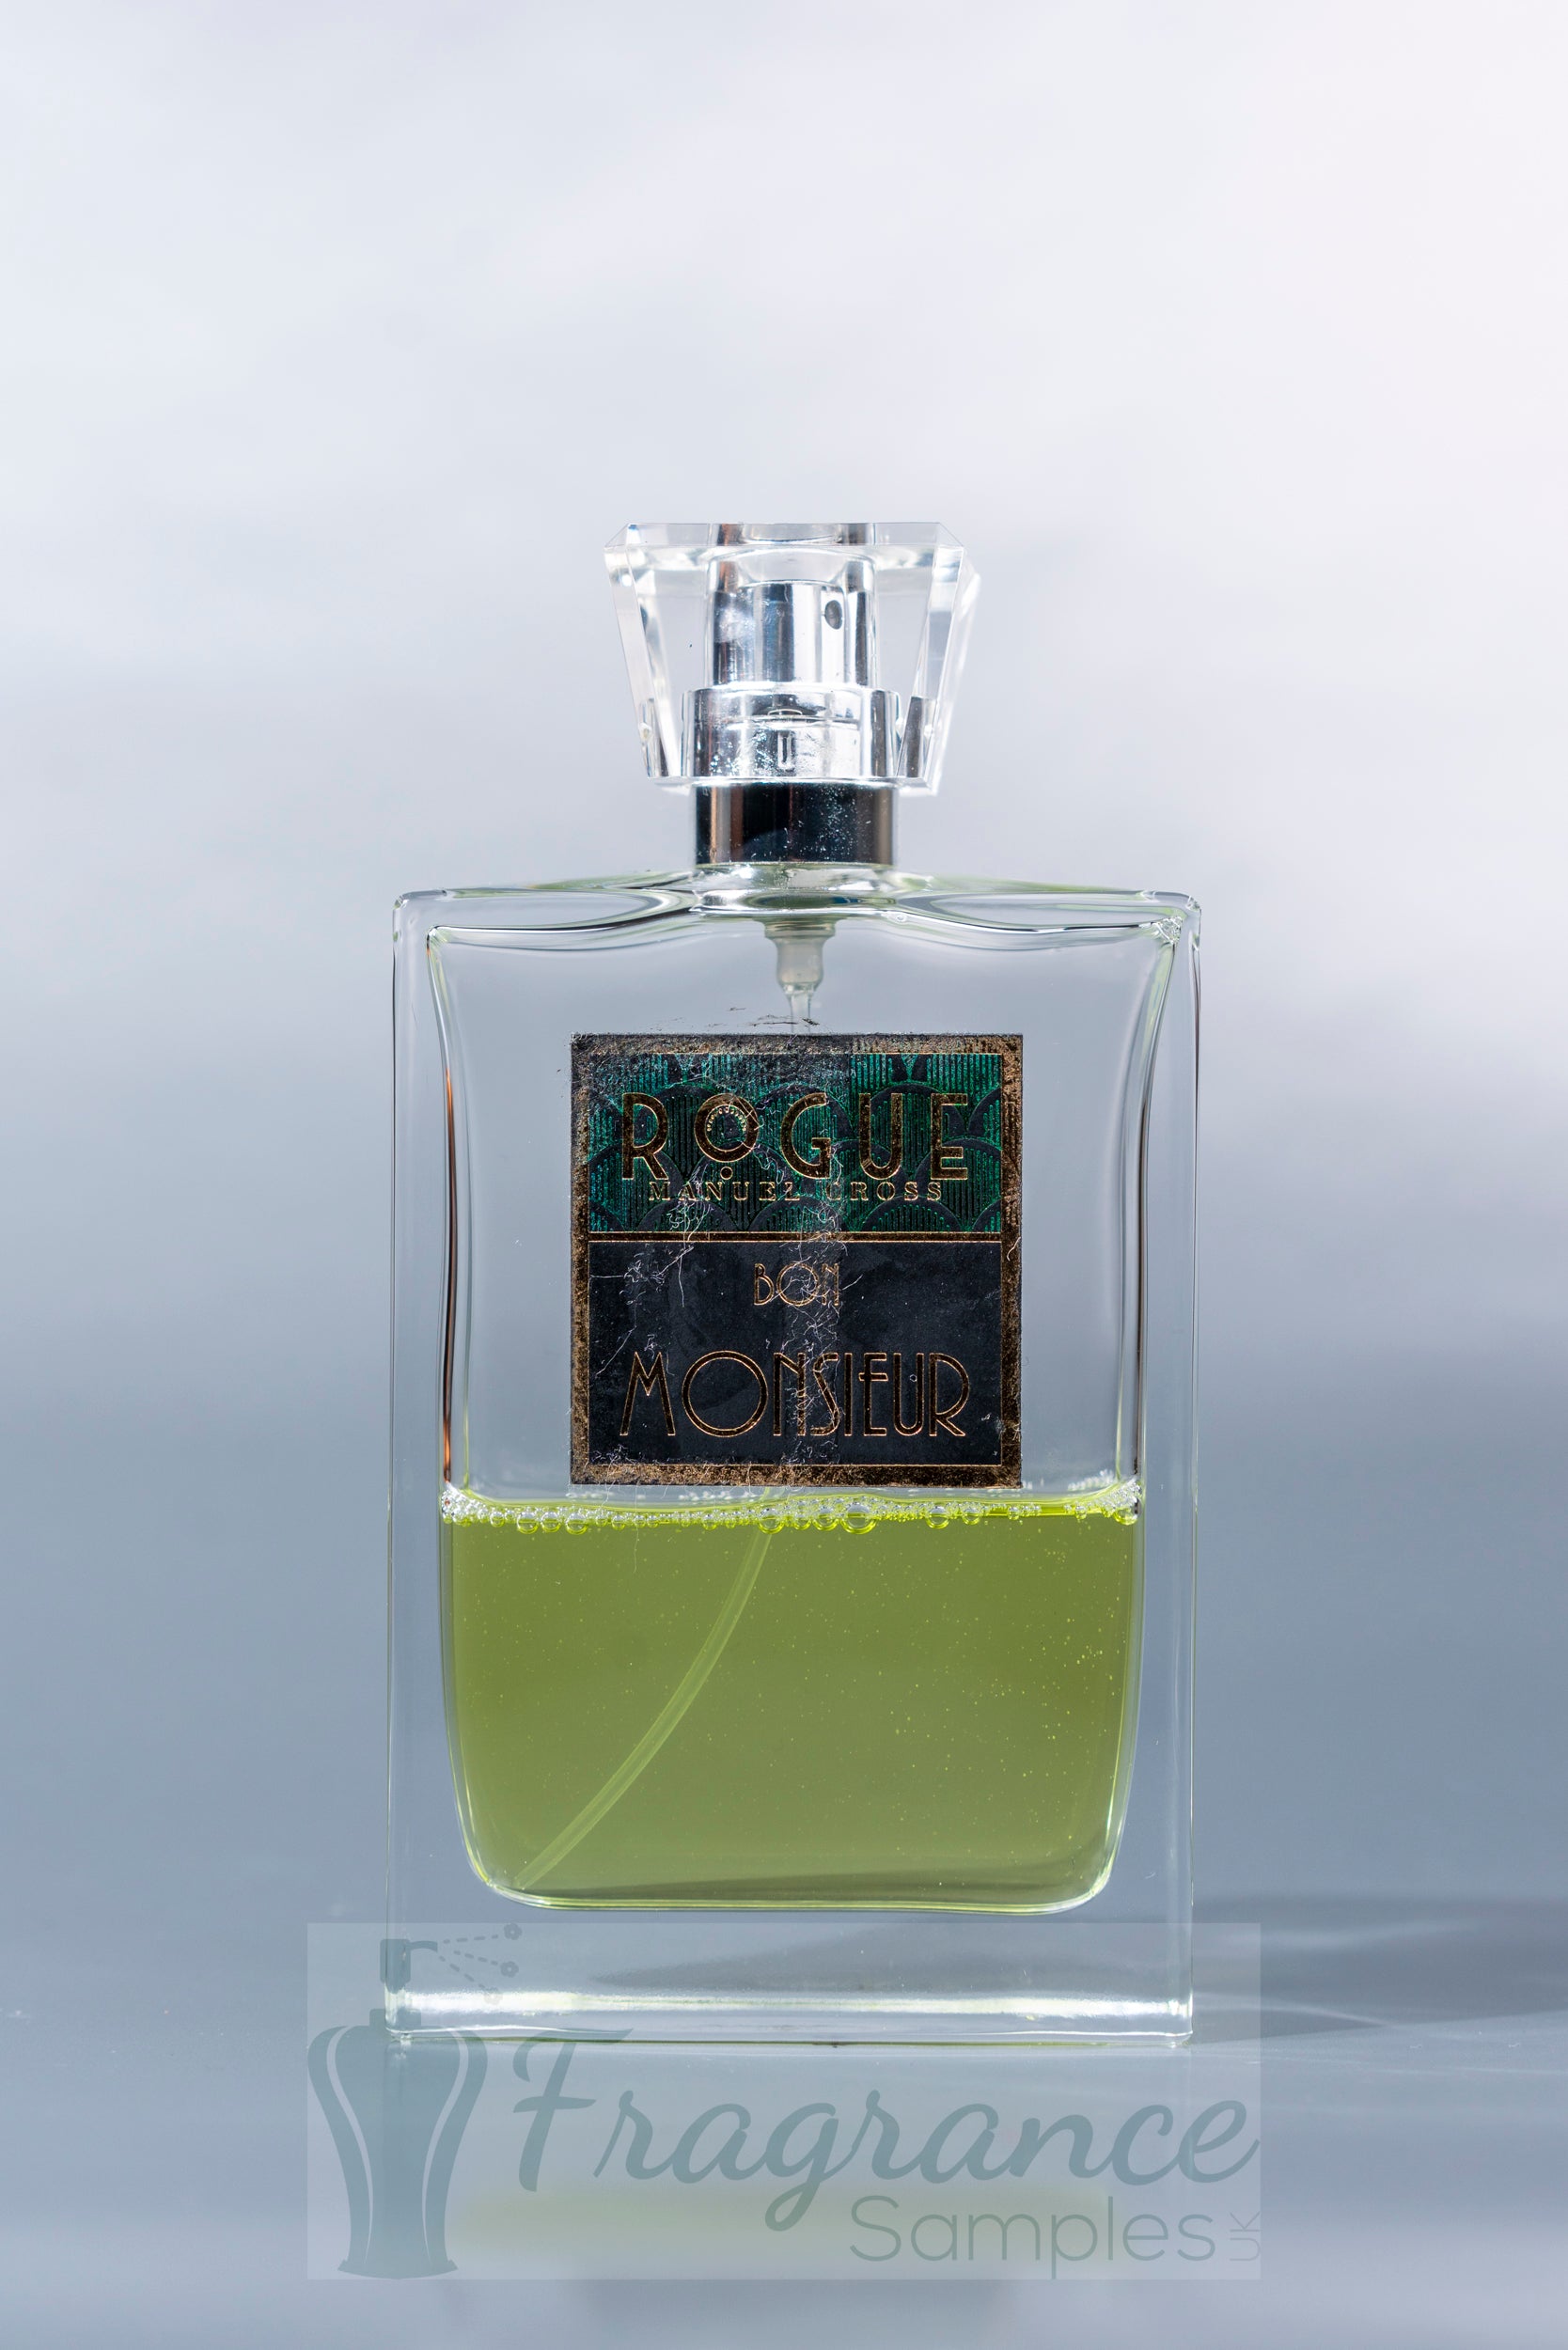 Rogue Perfumery Bon Monsieur